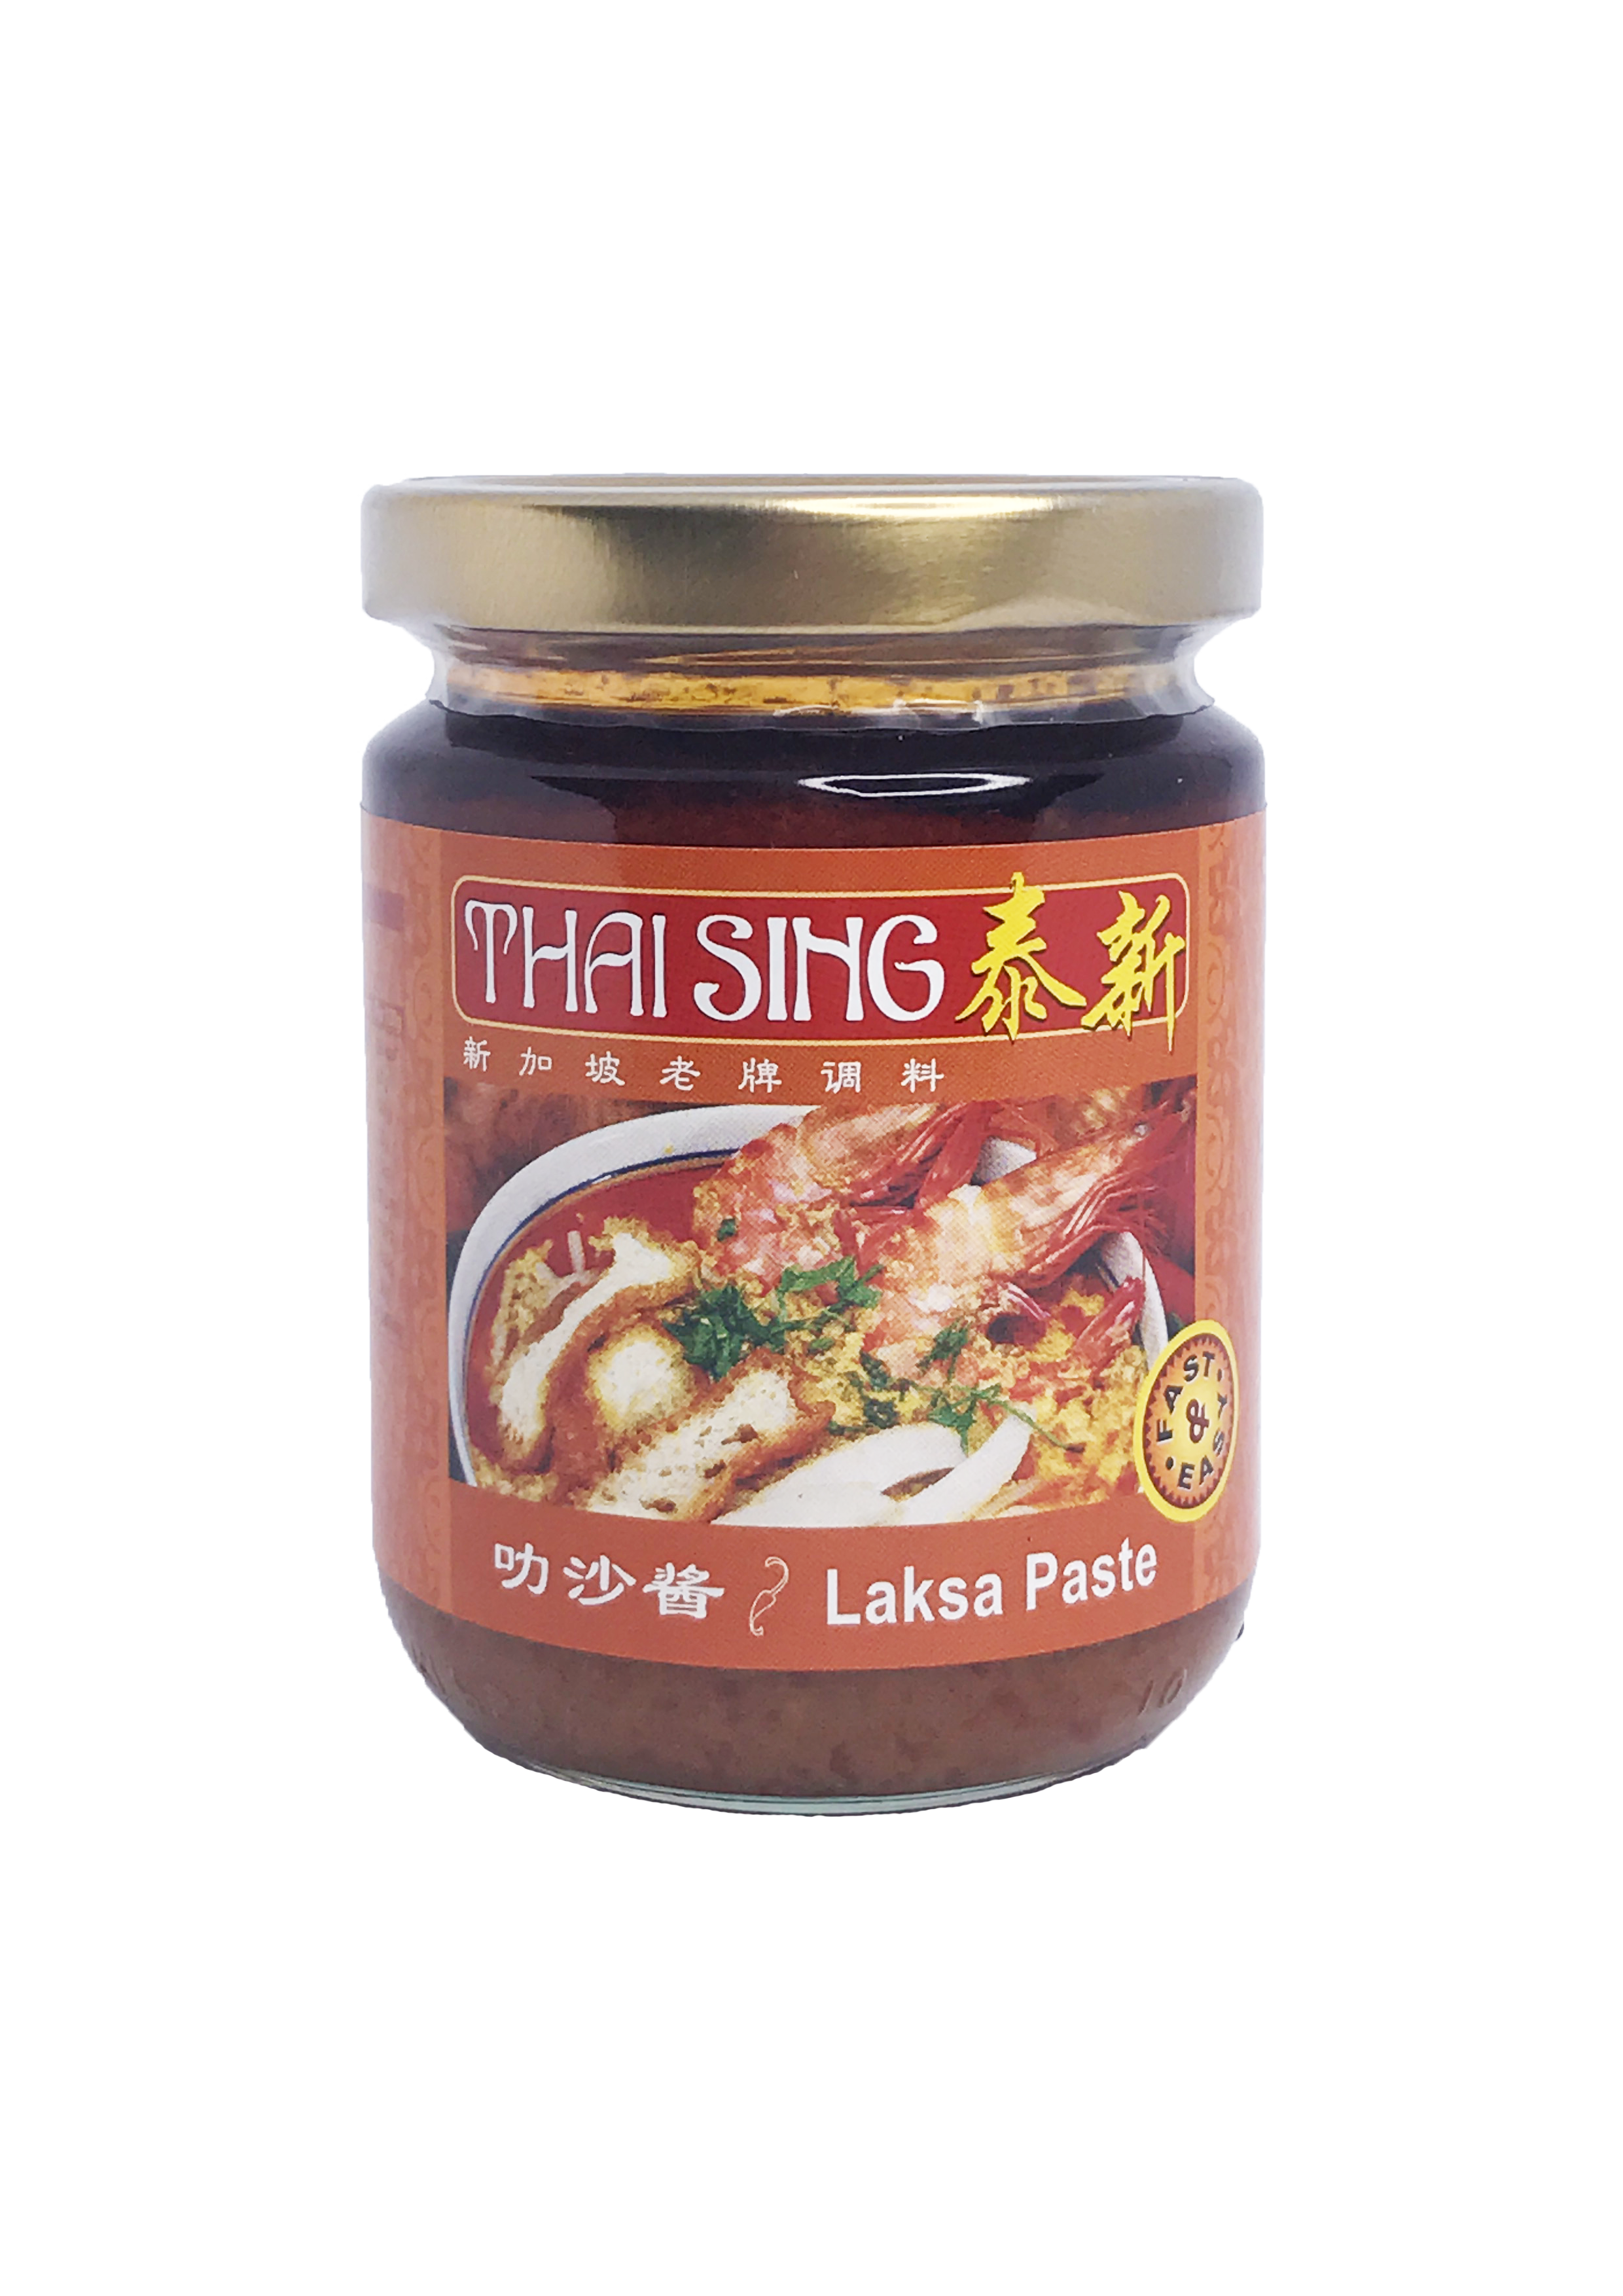 Thai Sing Foodstuffs Industry Pte Ltd.